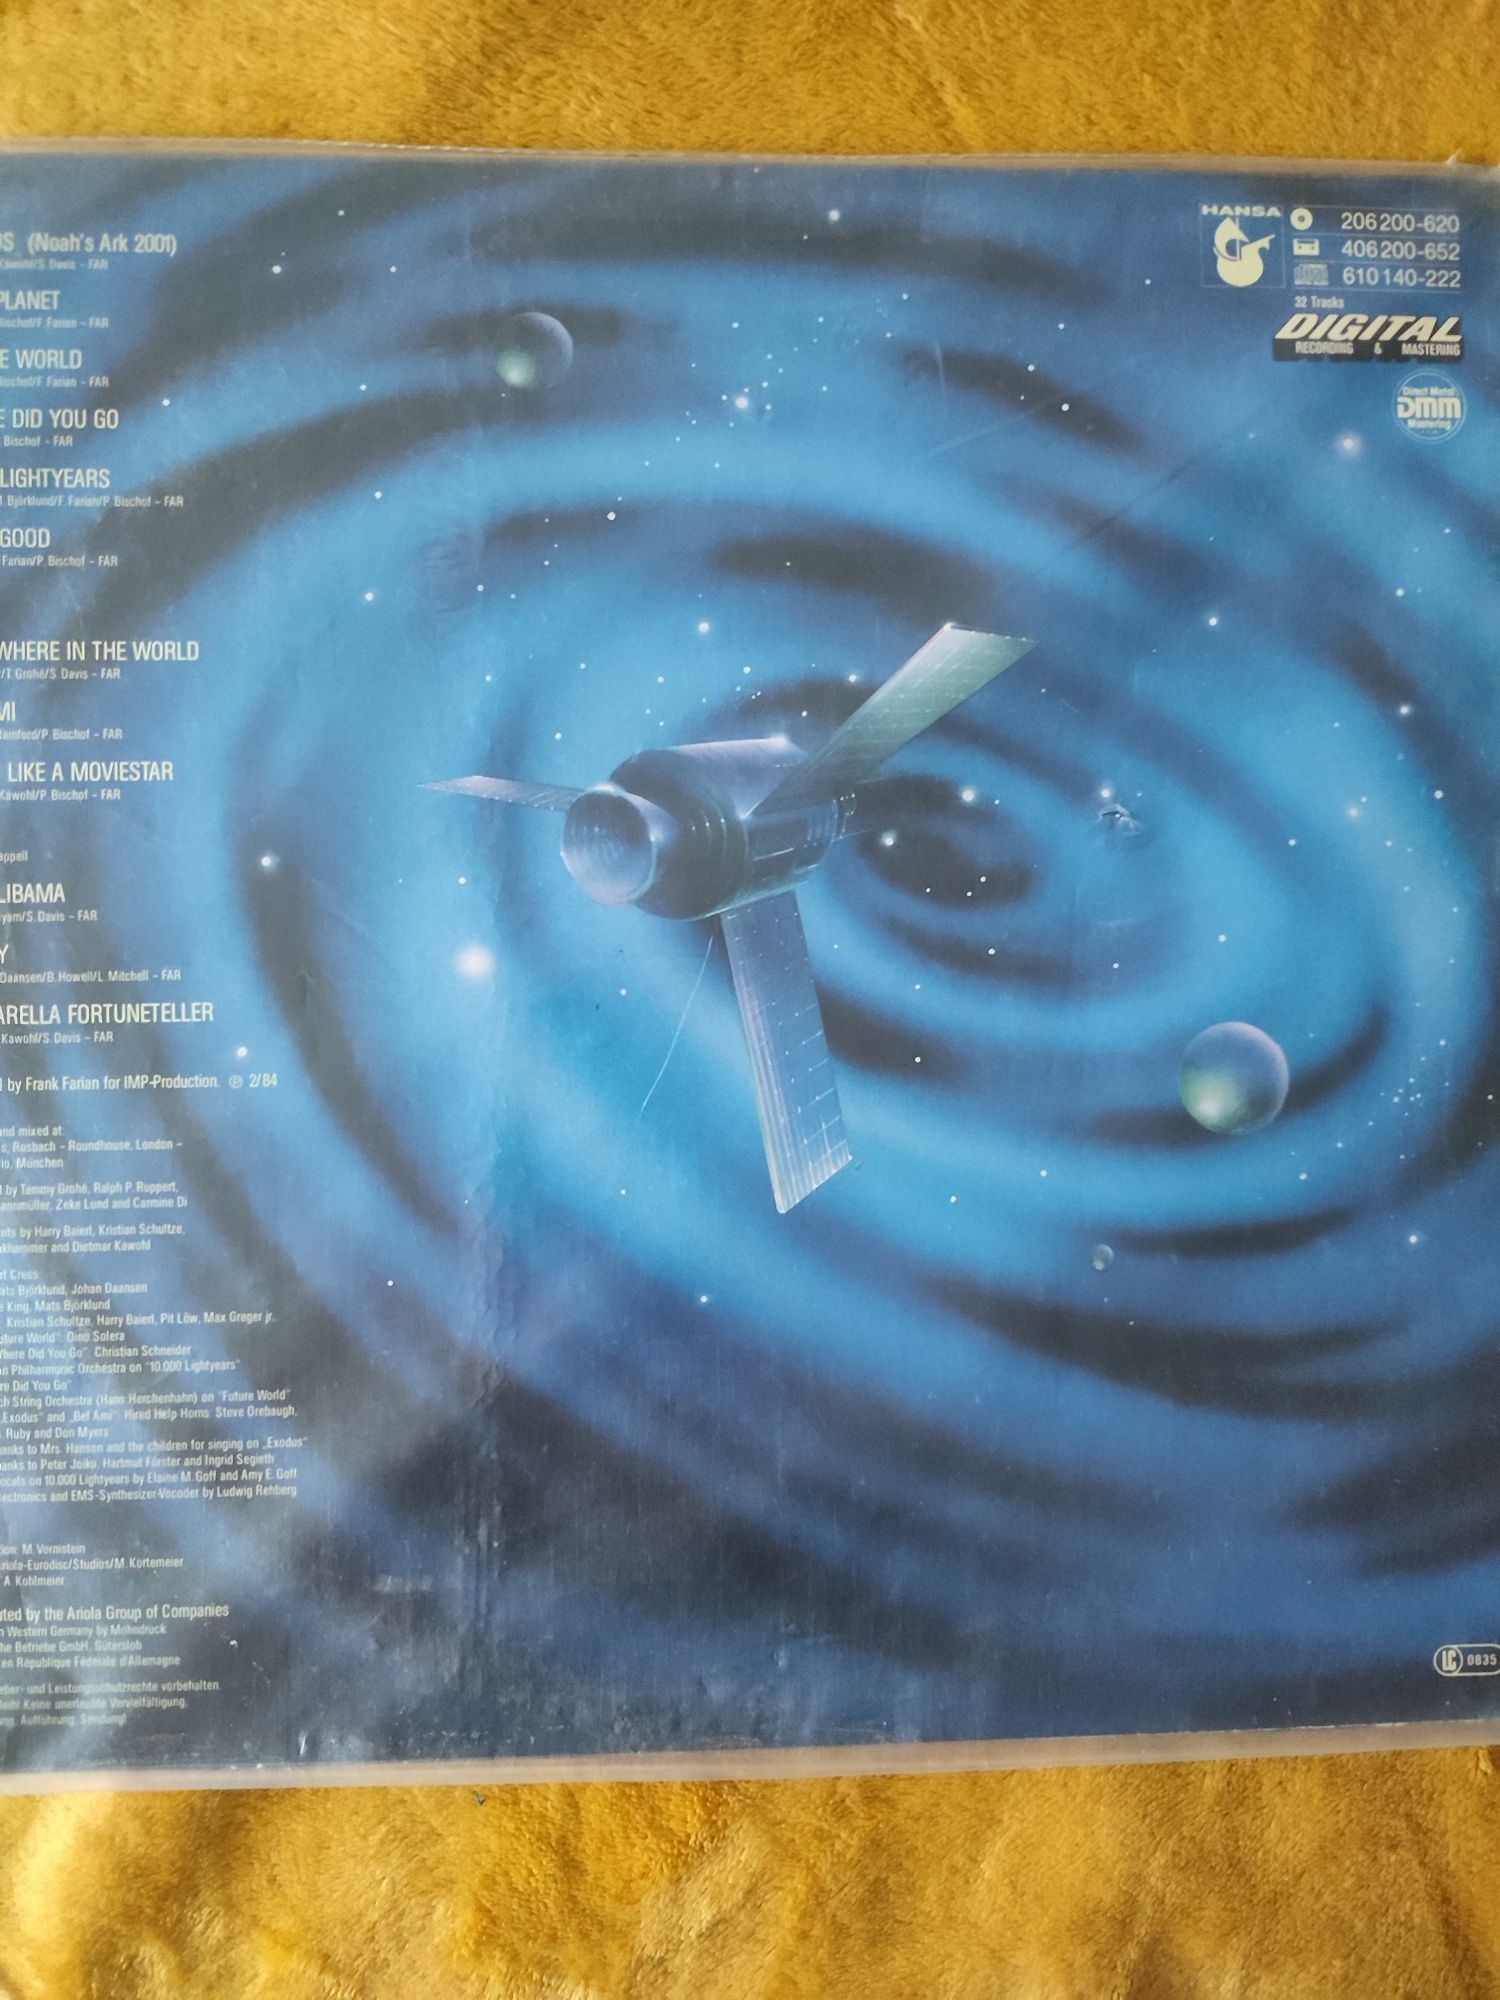 Вiнiлова платiвка Boney M,альбом 1984р.